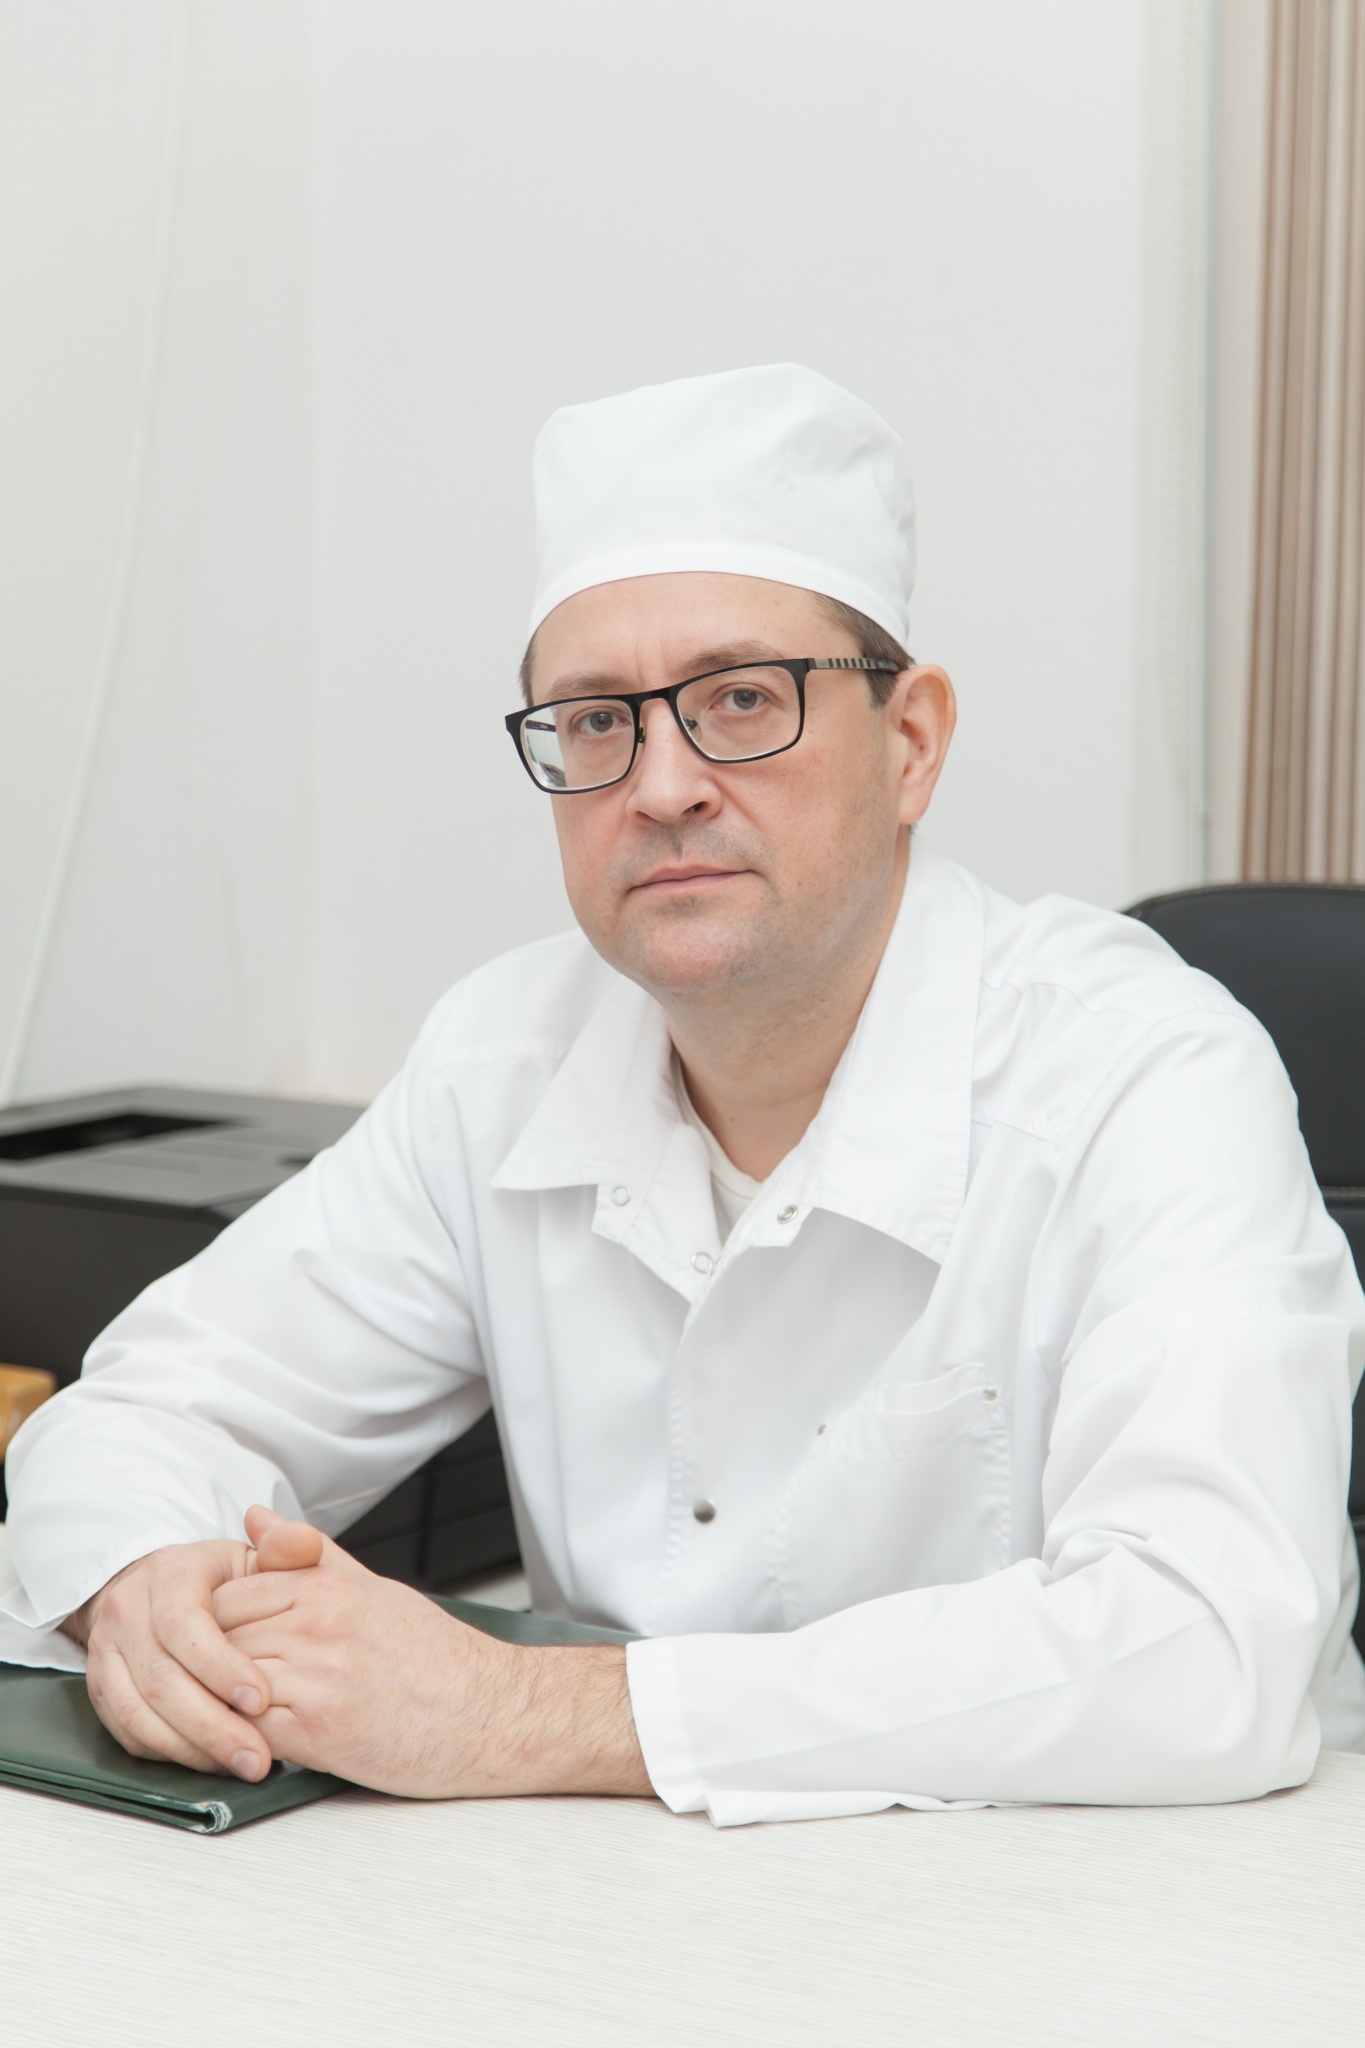 Сергей Капралов